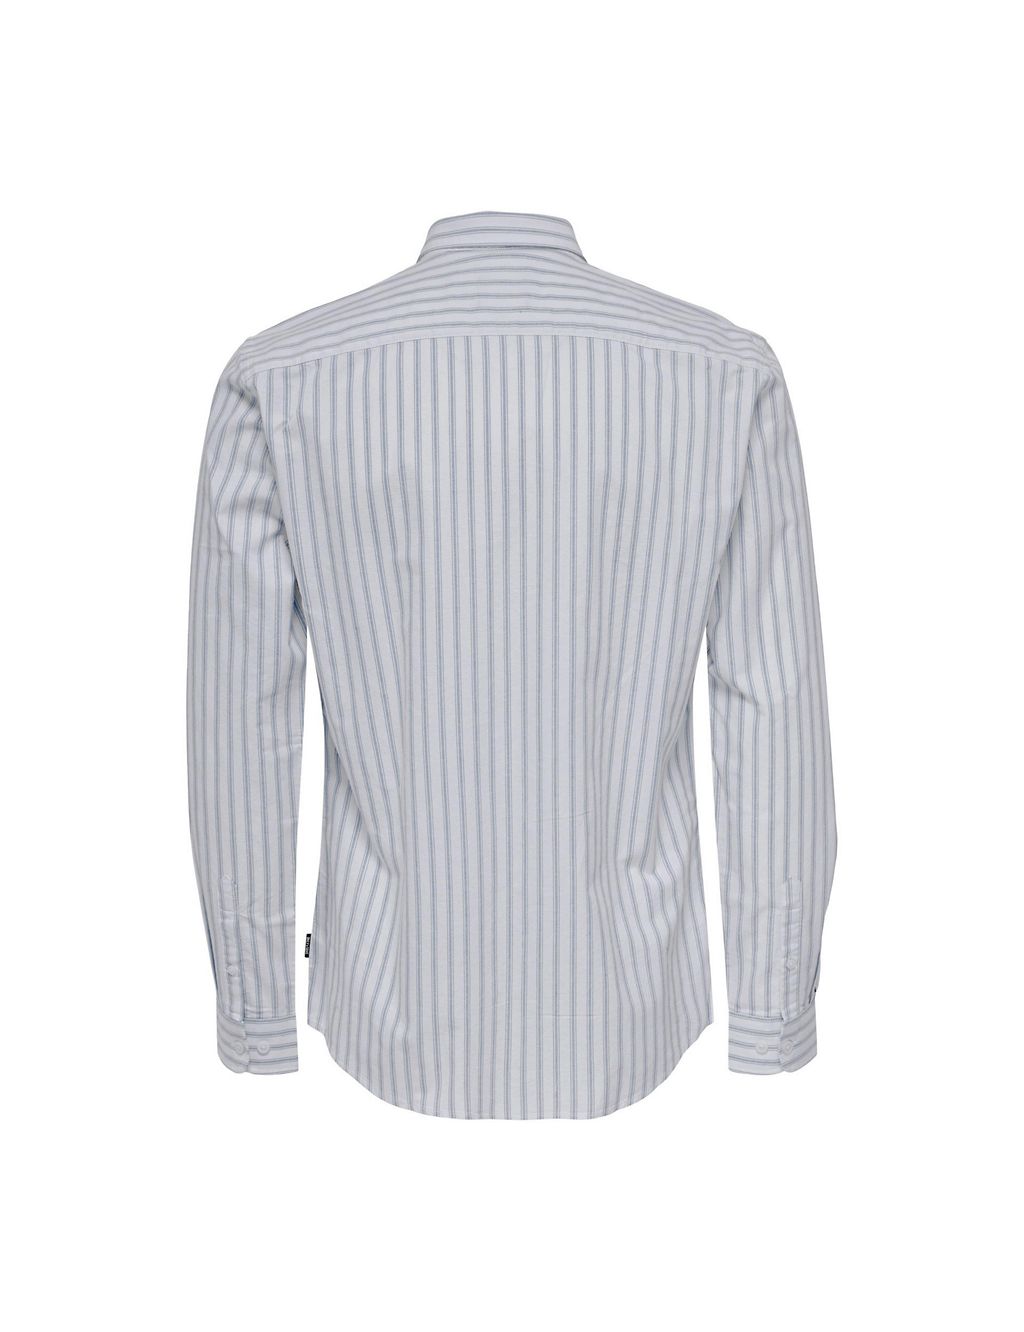 Cotton Rich Striped Oxford Shirt 2 of 2